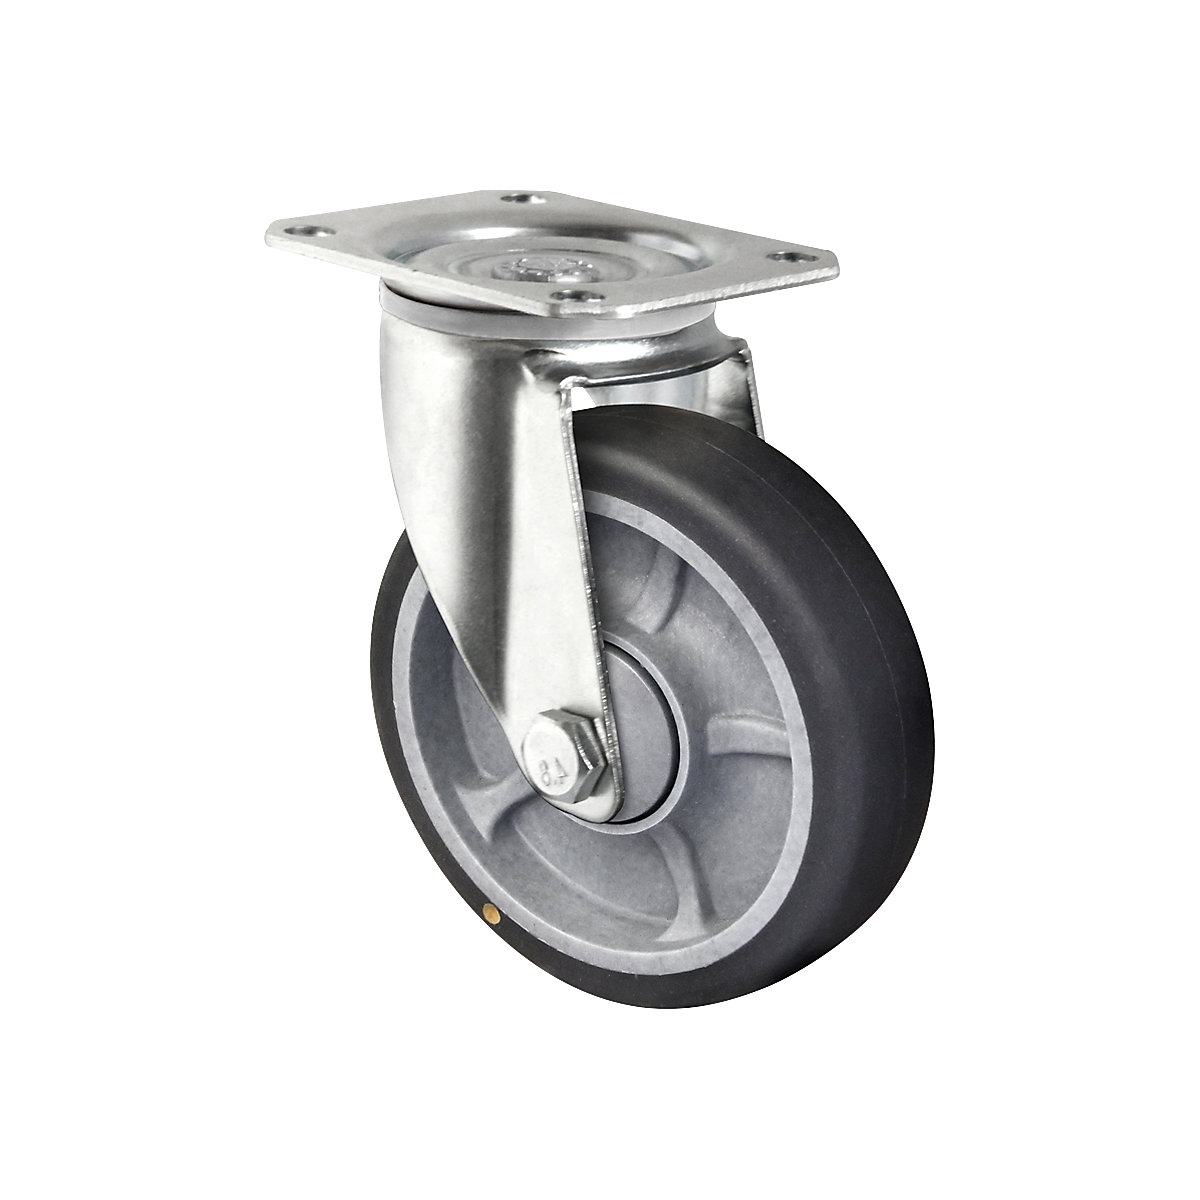 EUROKRAFTbasic – TPE tyres on PP rim, ESD, 2+ items, wheel Ø x width 100 x 32 mm, swivel castor